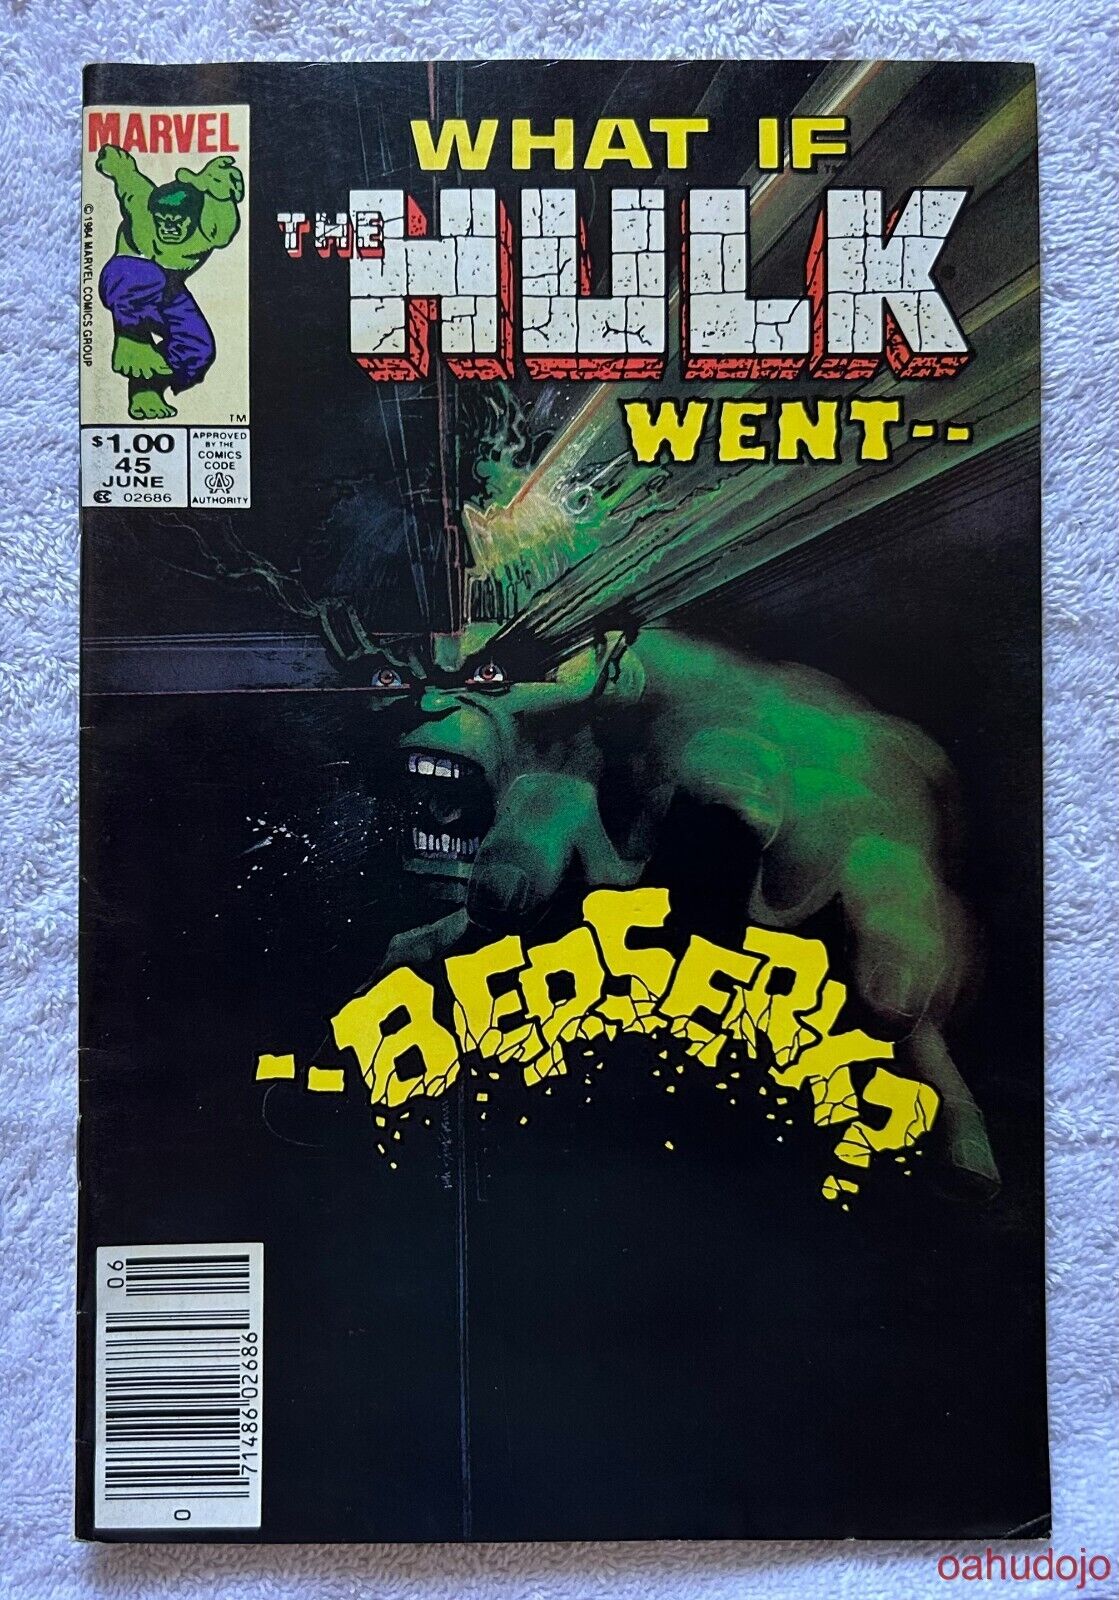 Marvel WHAT IF #45 The Hulk Went Berserk? July 1984 NM*